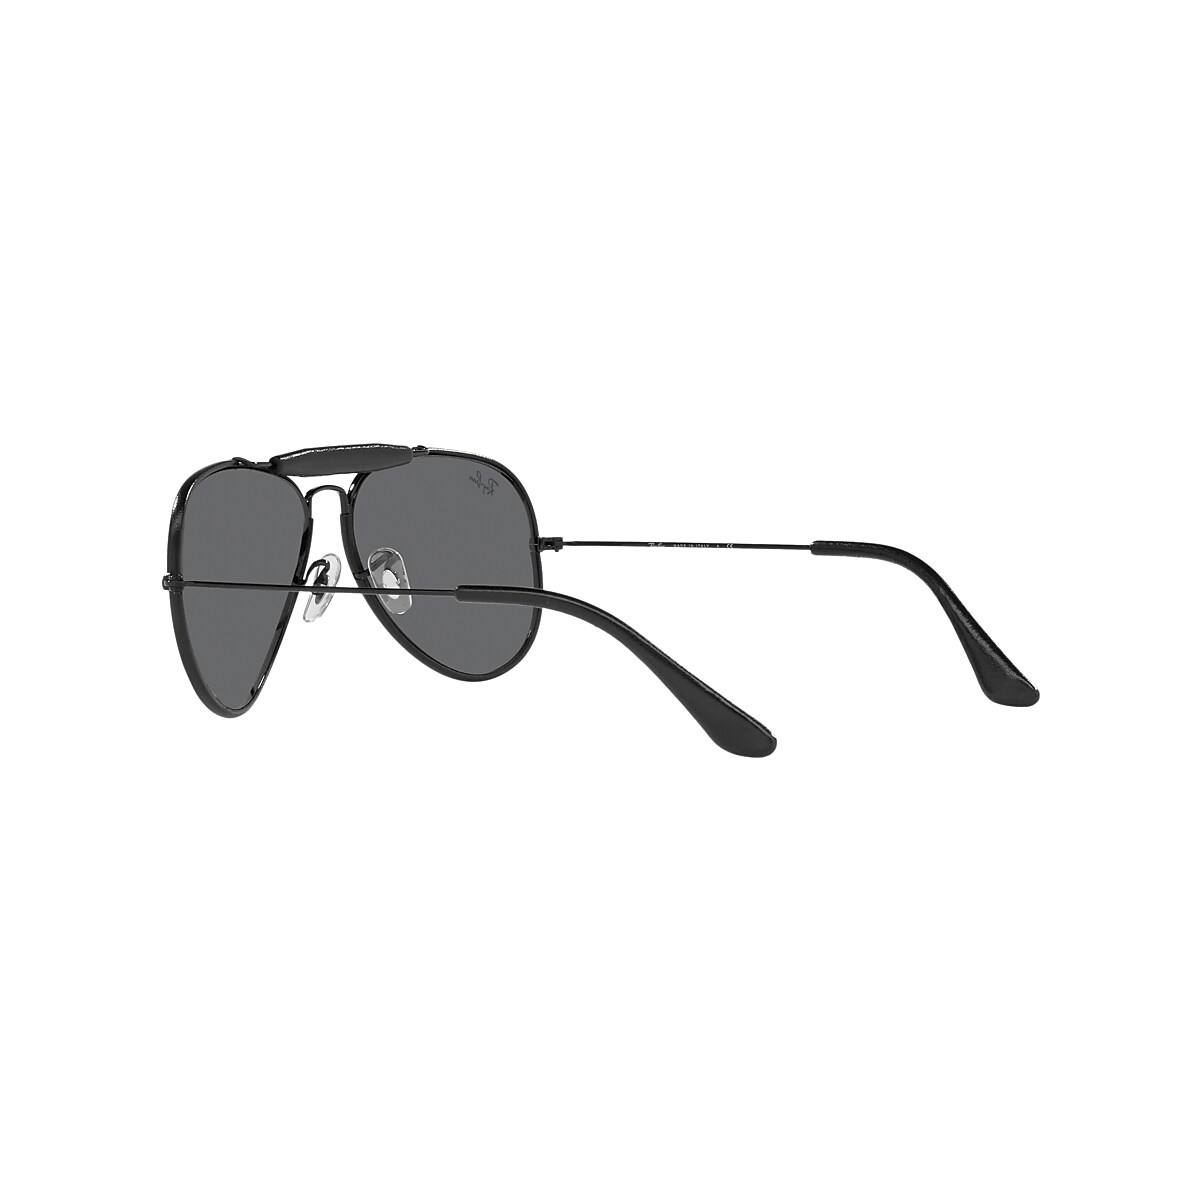 militia Broom Artistic Aviator Limited Edition Sunglasses in Black and Dark Grey | Ray-Ban®